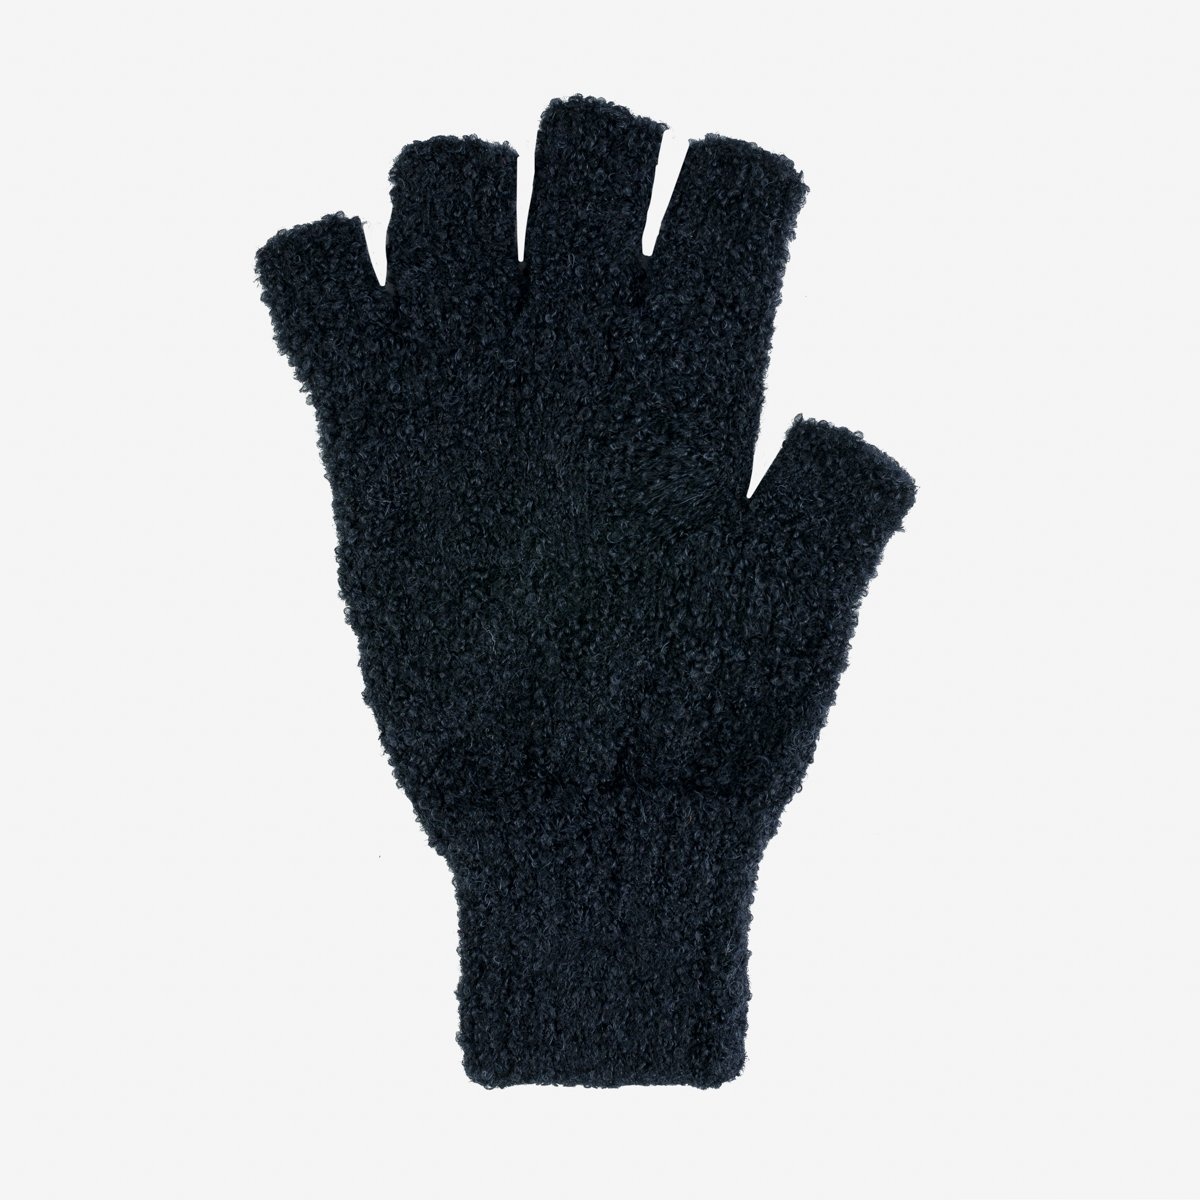 DEC-GLV-BLK Decka Fingerless Gloves - Black - 1